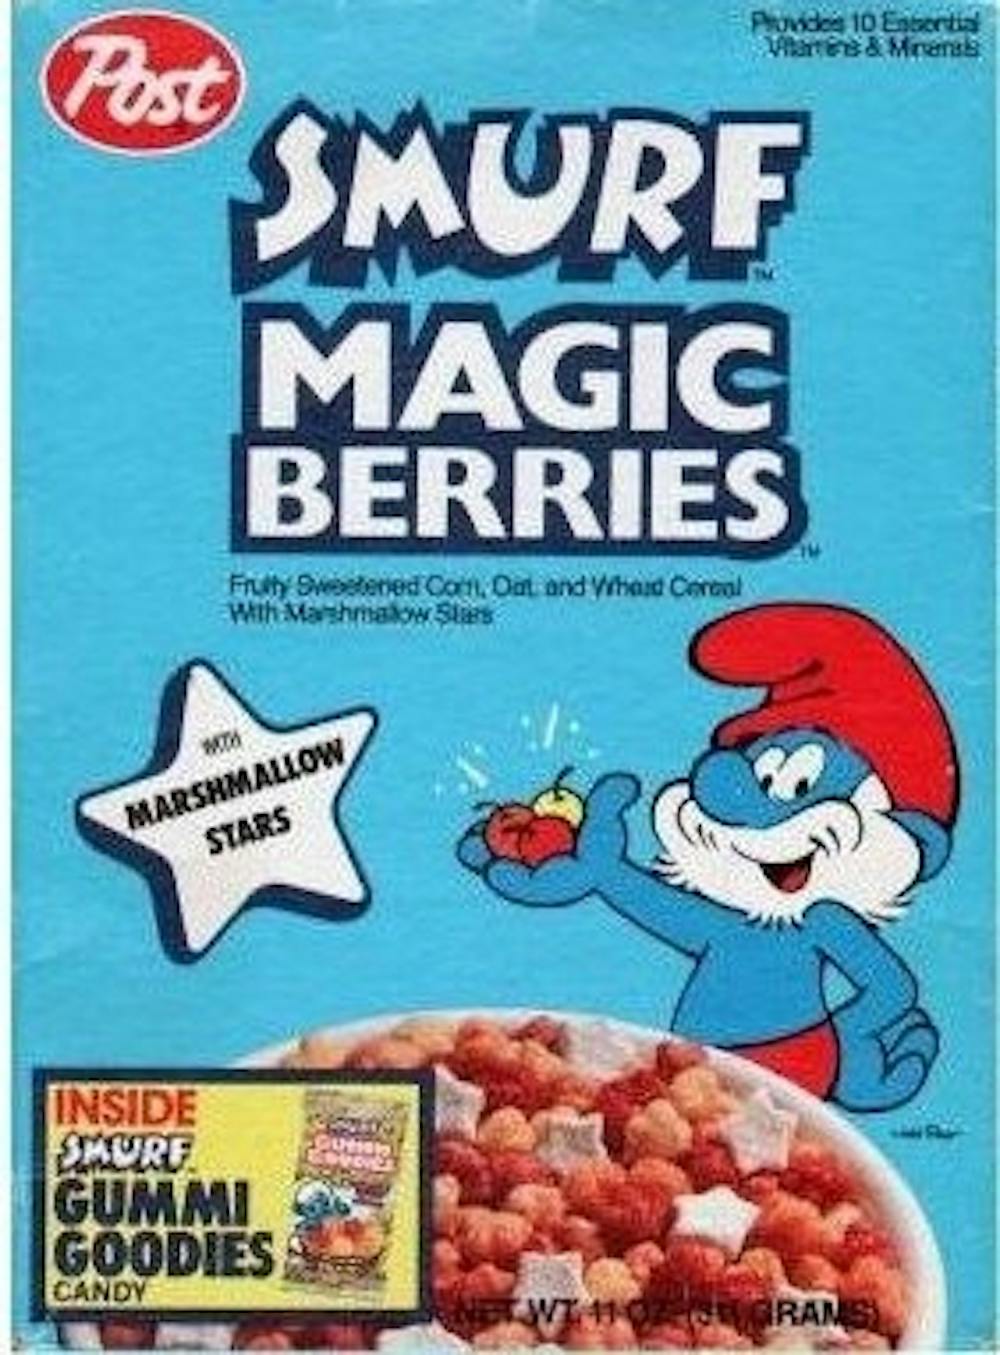 Smurf_Magic_Berries